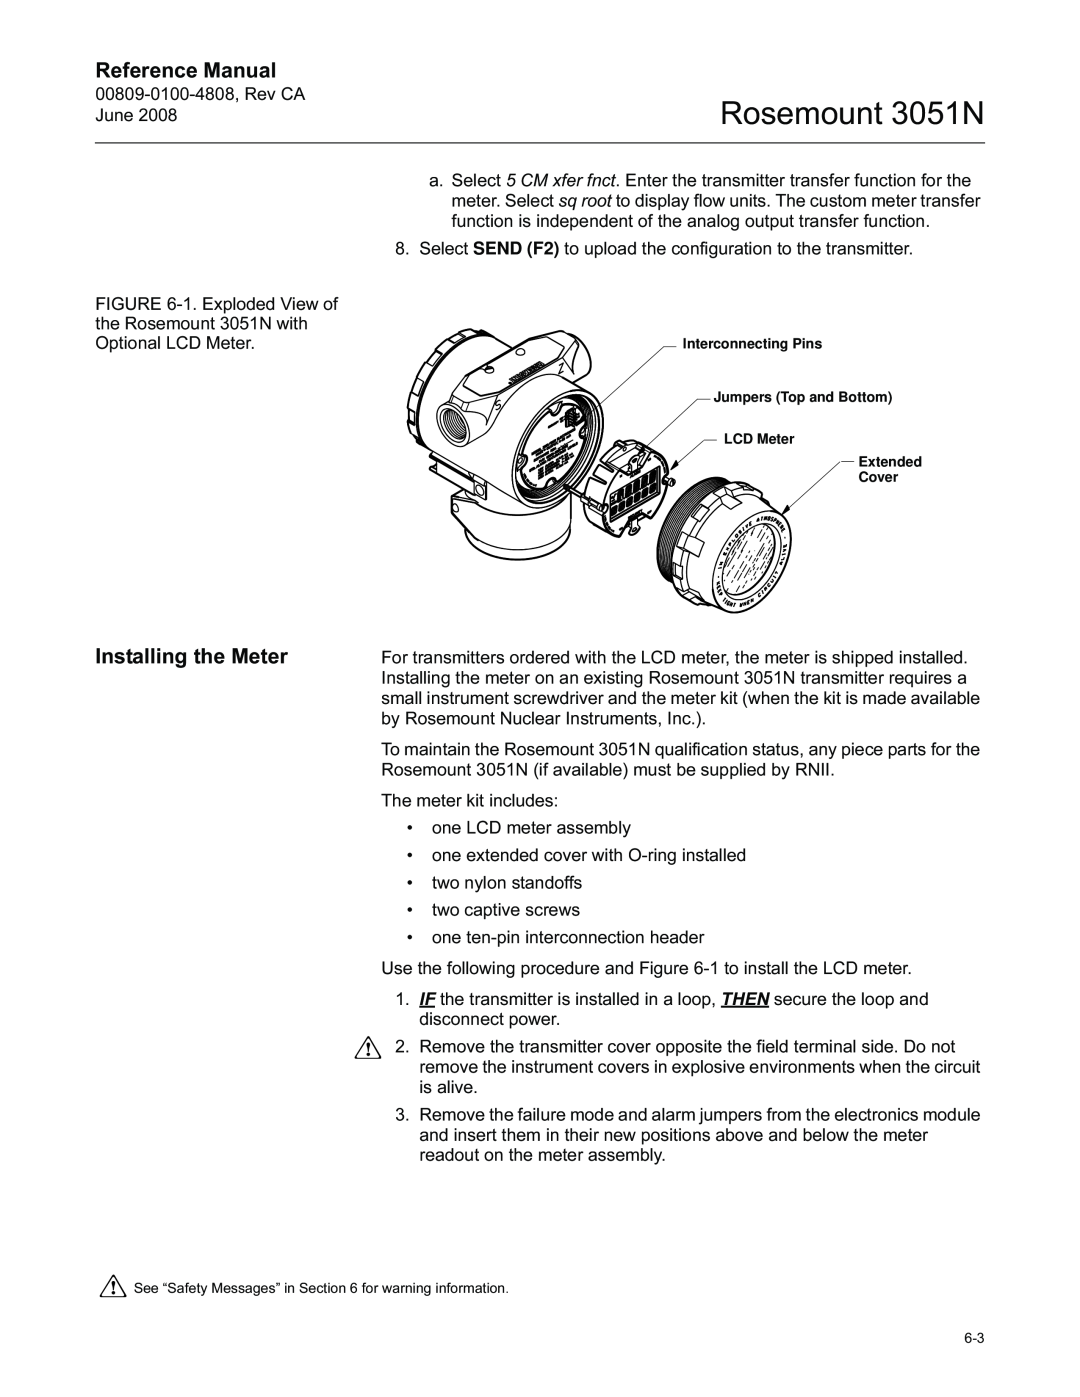 Emerson manual Installing the Meter, Rosemount 3051N, Reference Manual 